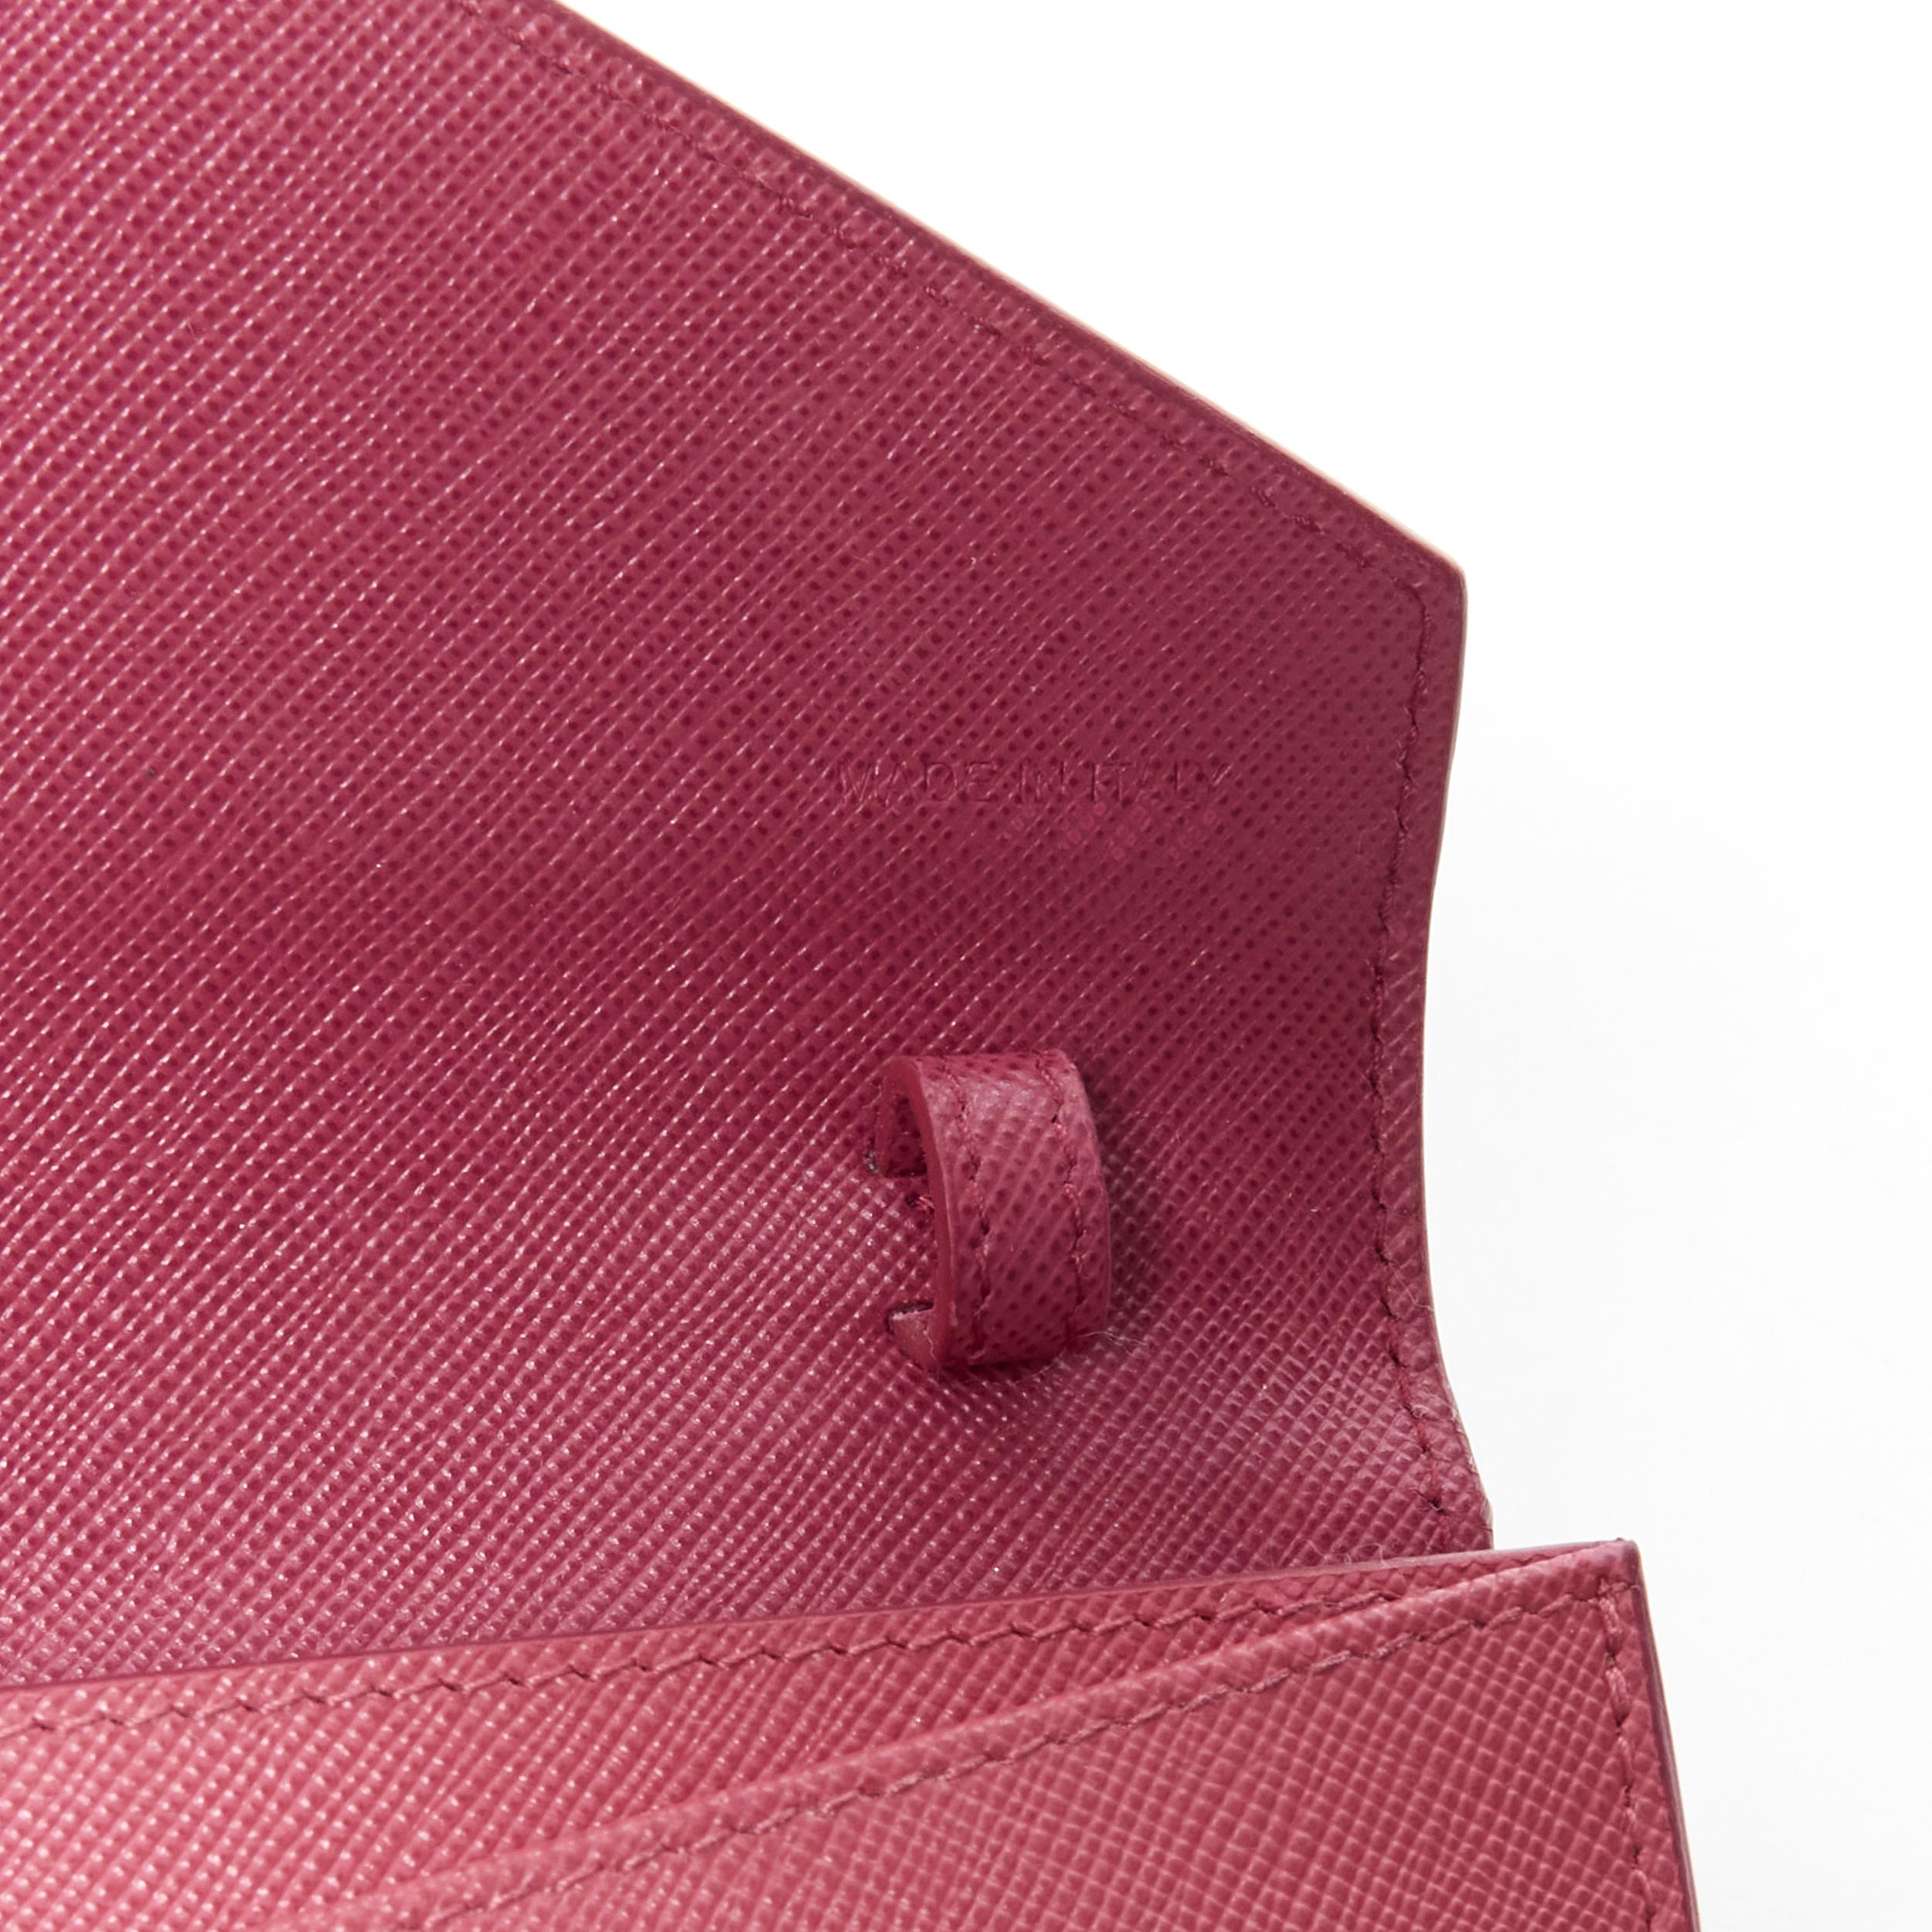 new PRADA pink diamond envelop gold logo wallet on chain crossbody clutch bag 2